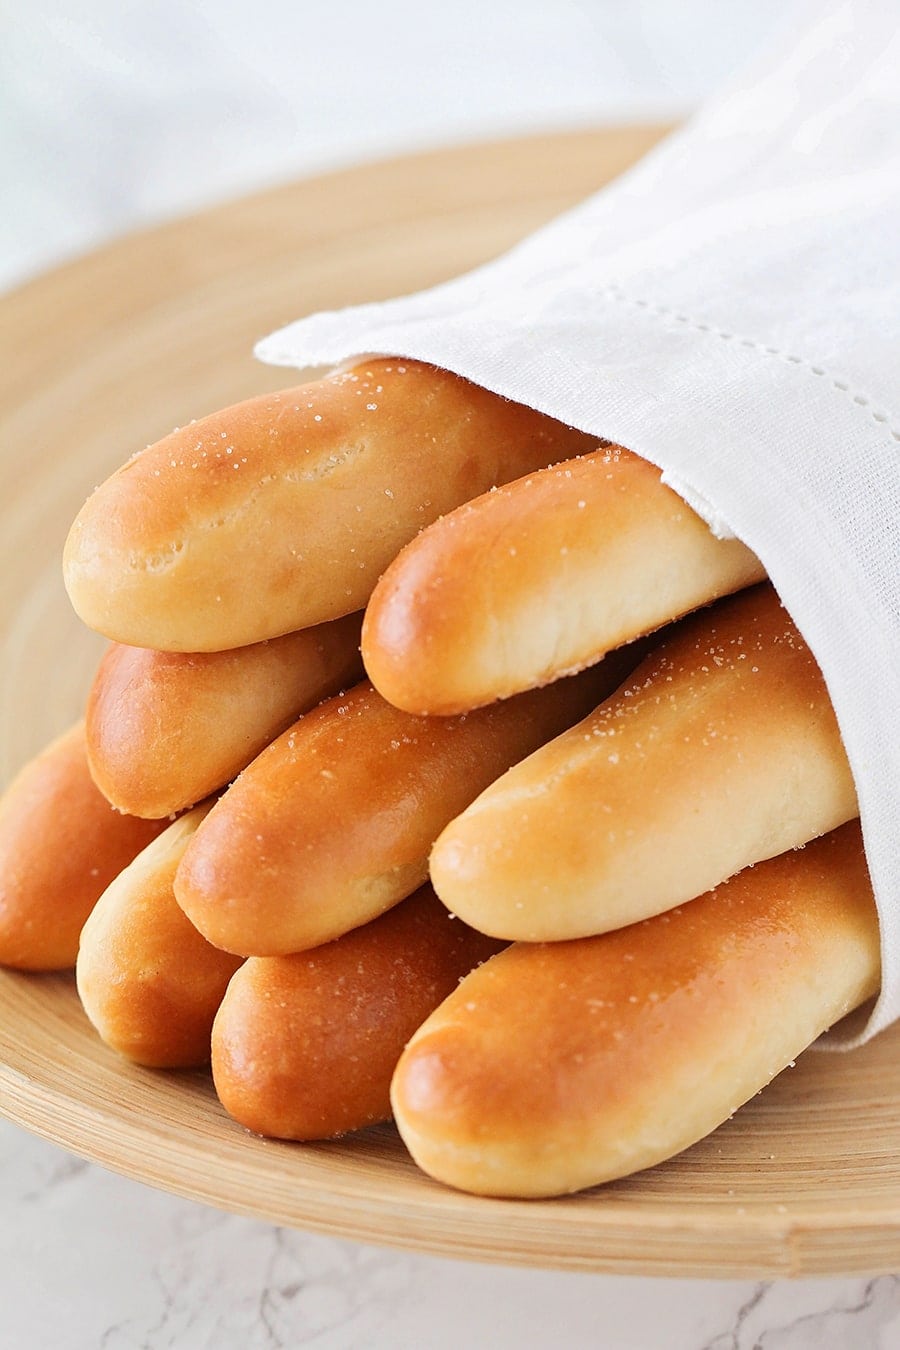 Italian Appetizers - Several Olive garden breadsticks in a white tea towel.